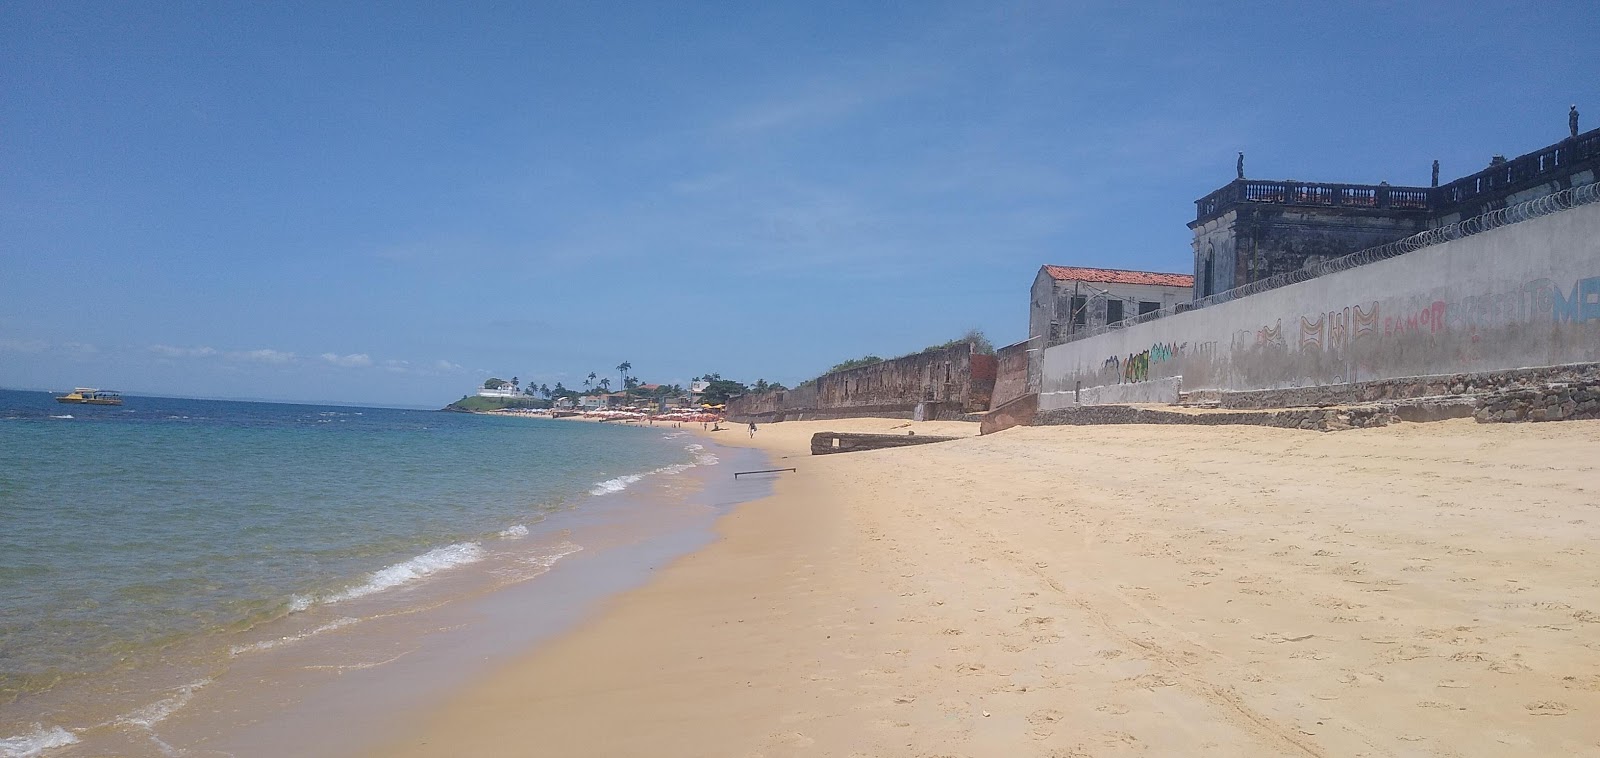 Zdjęcie Praia da Boa Viagem z przestronna plaża